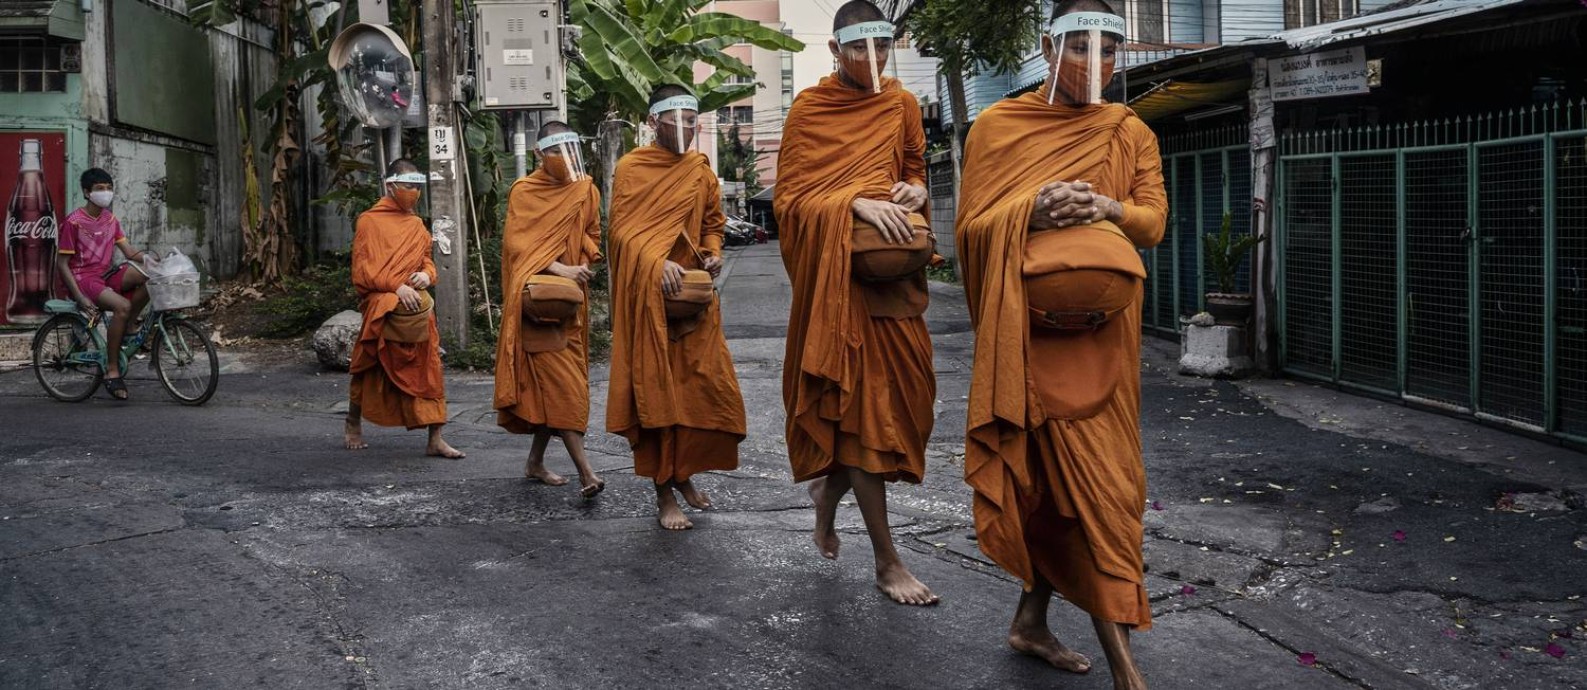 Monges tailandeses usam máscara e viseira para se protegerem da Covid-19 Foto: ADAM DEAN / NYTN